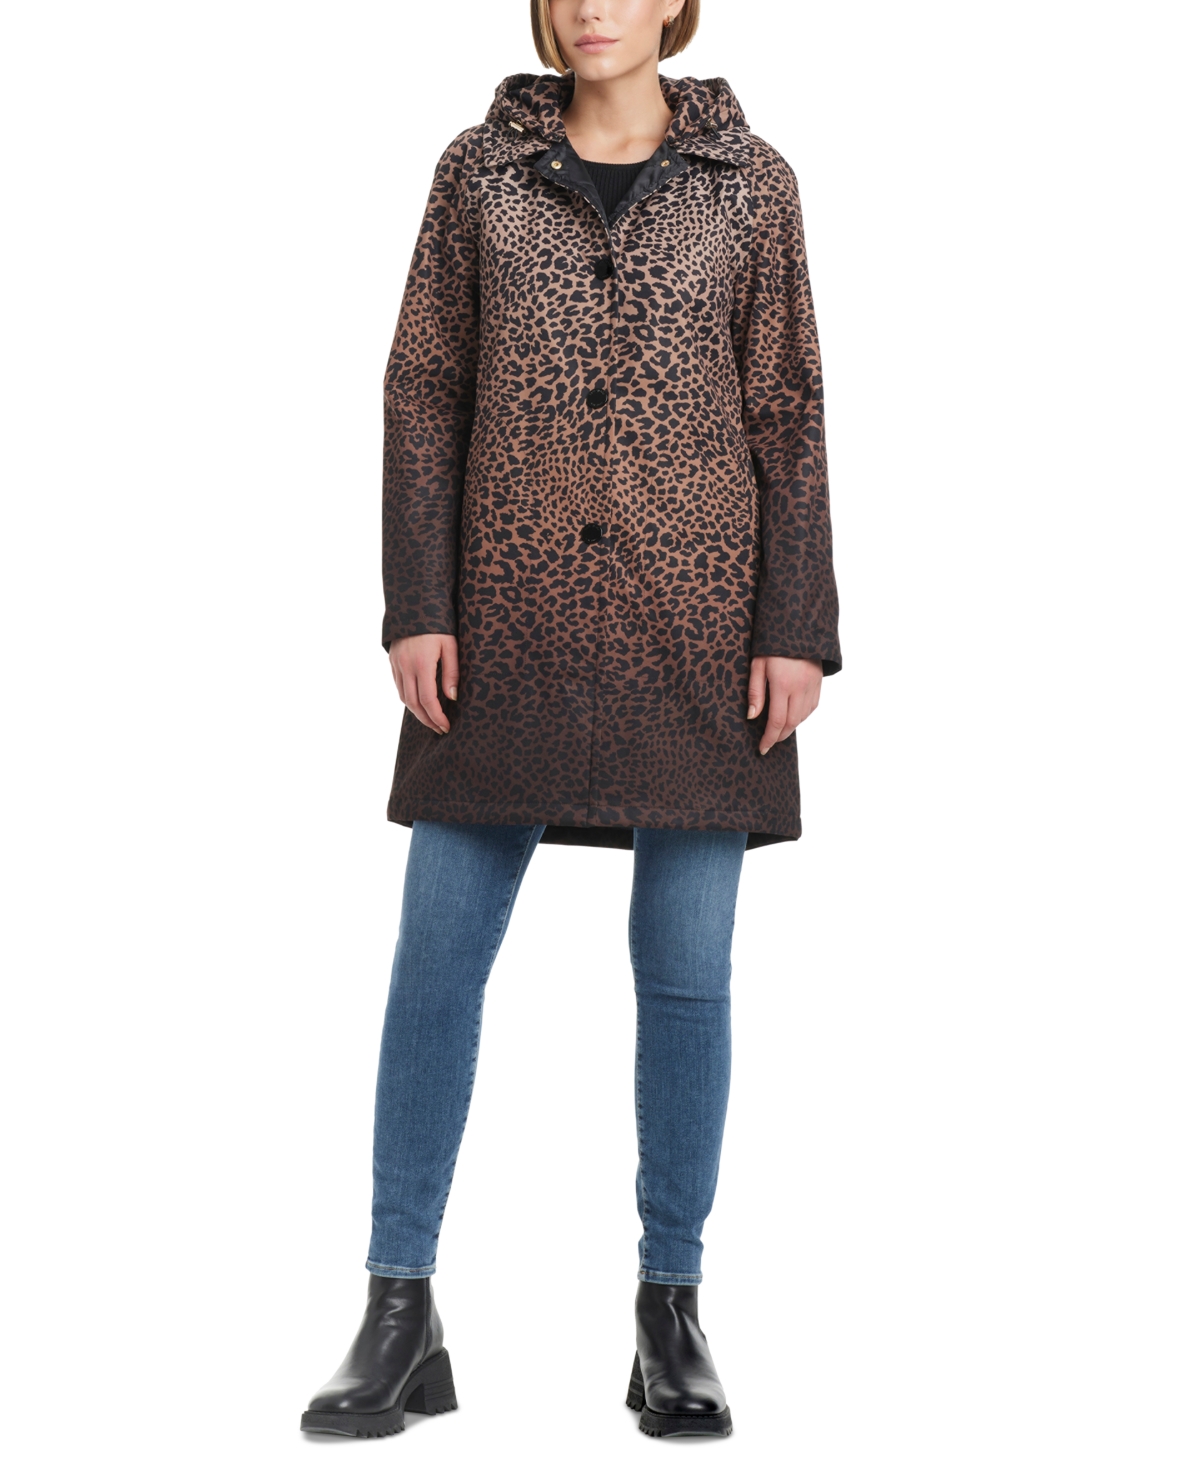 Women's Hooded Leopard-Print A-Line Raincoat - Regal Leopard